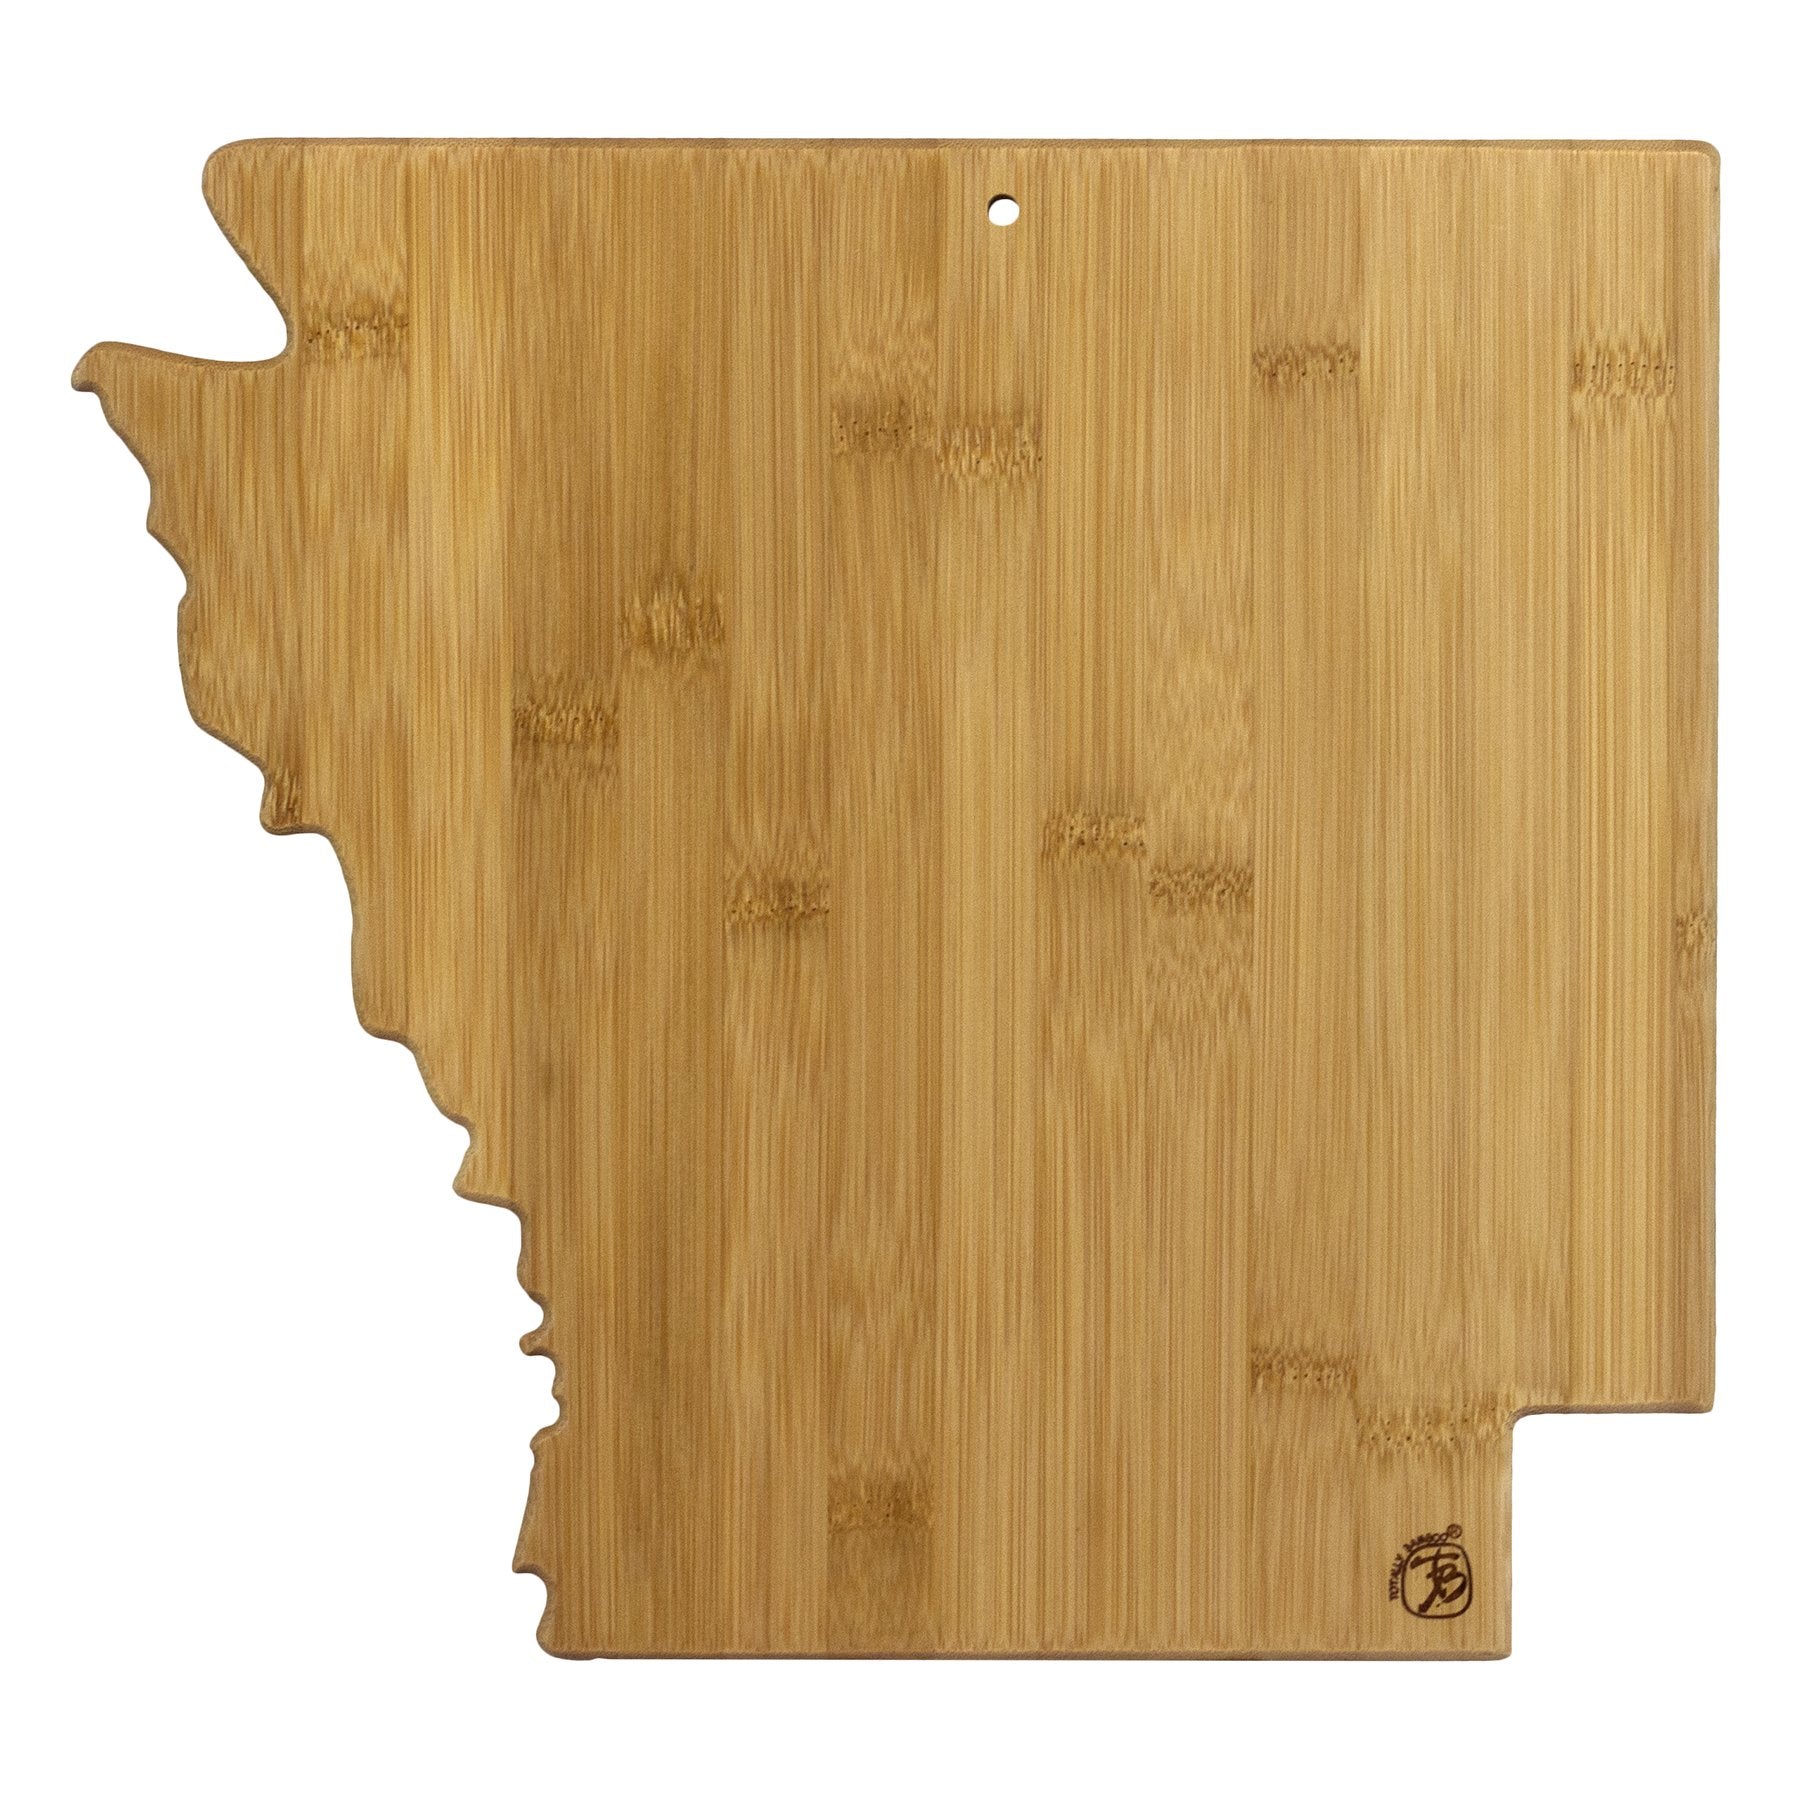 reverse side of Arkansas shaped board on white background.